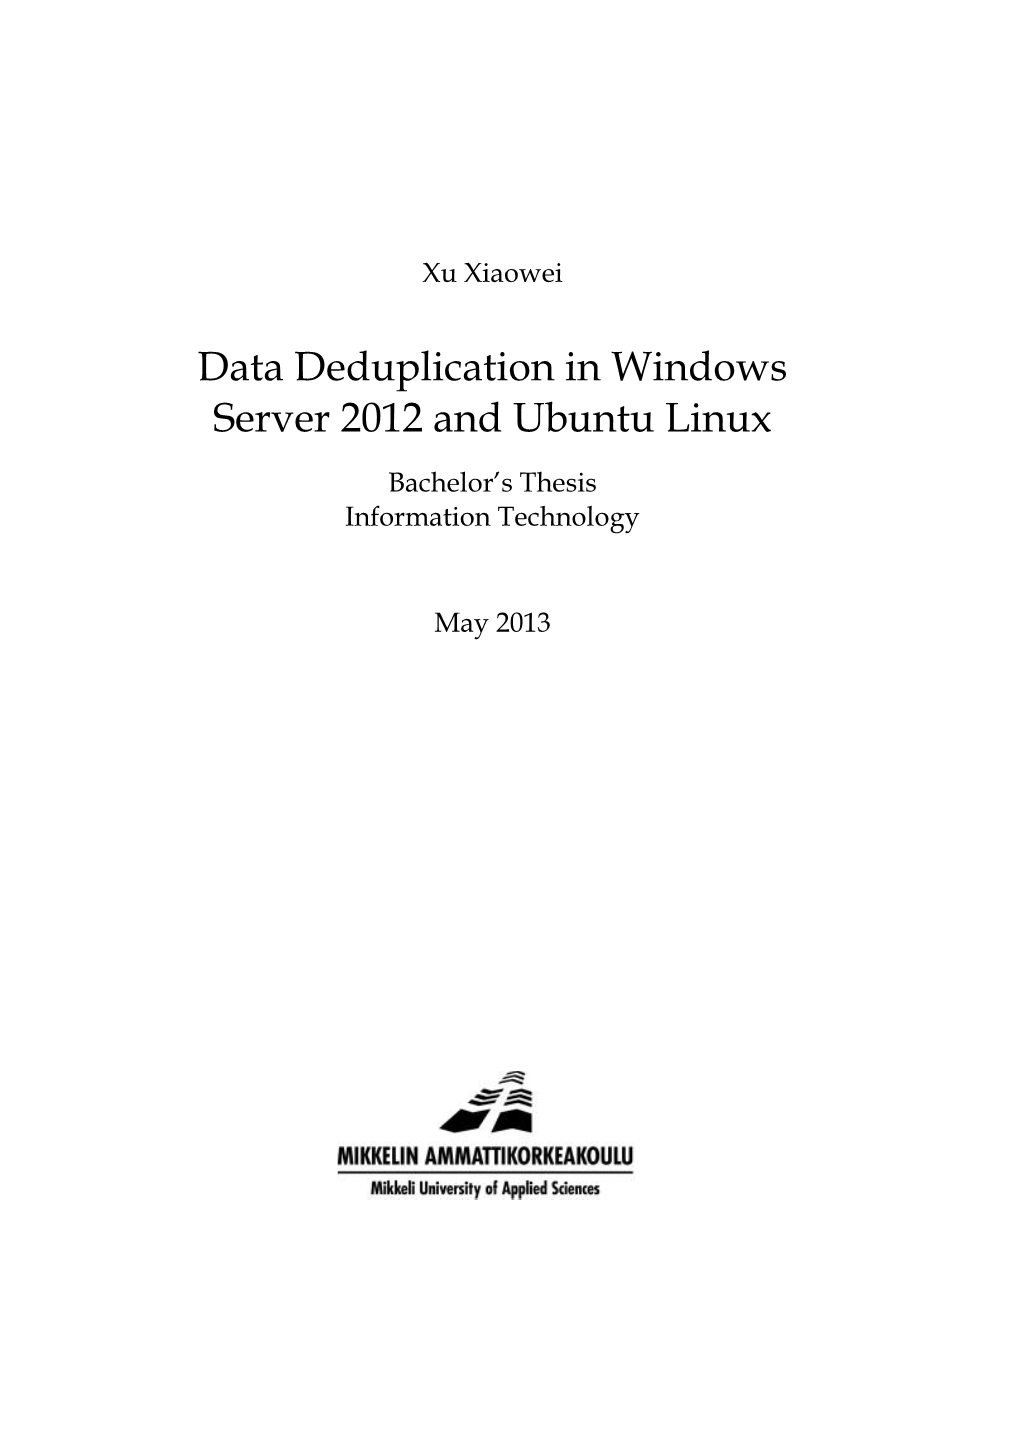 Data Deduplication in Windows Server 2012 and Ubuntu Linux